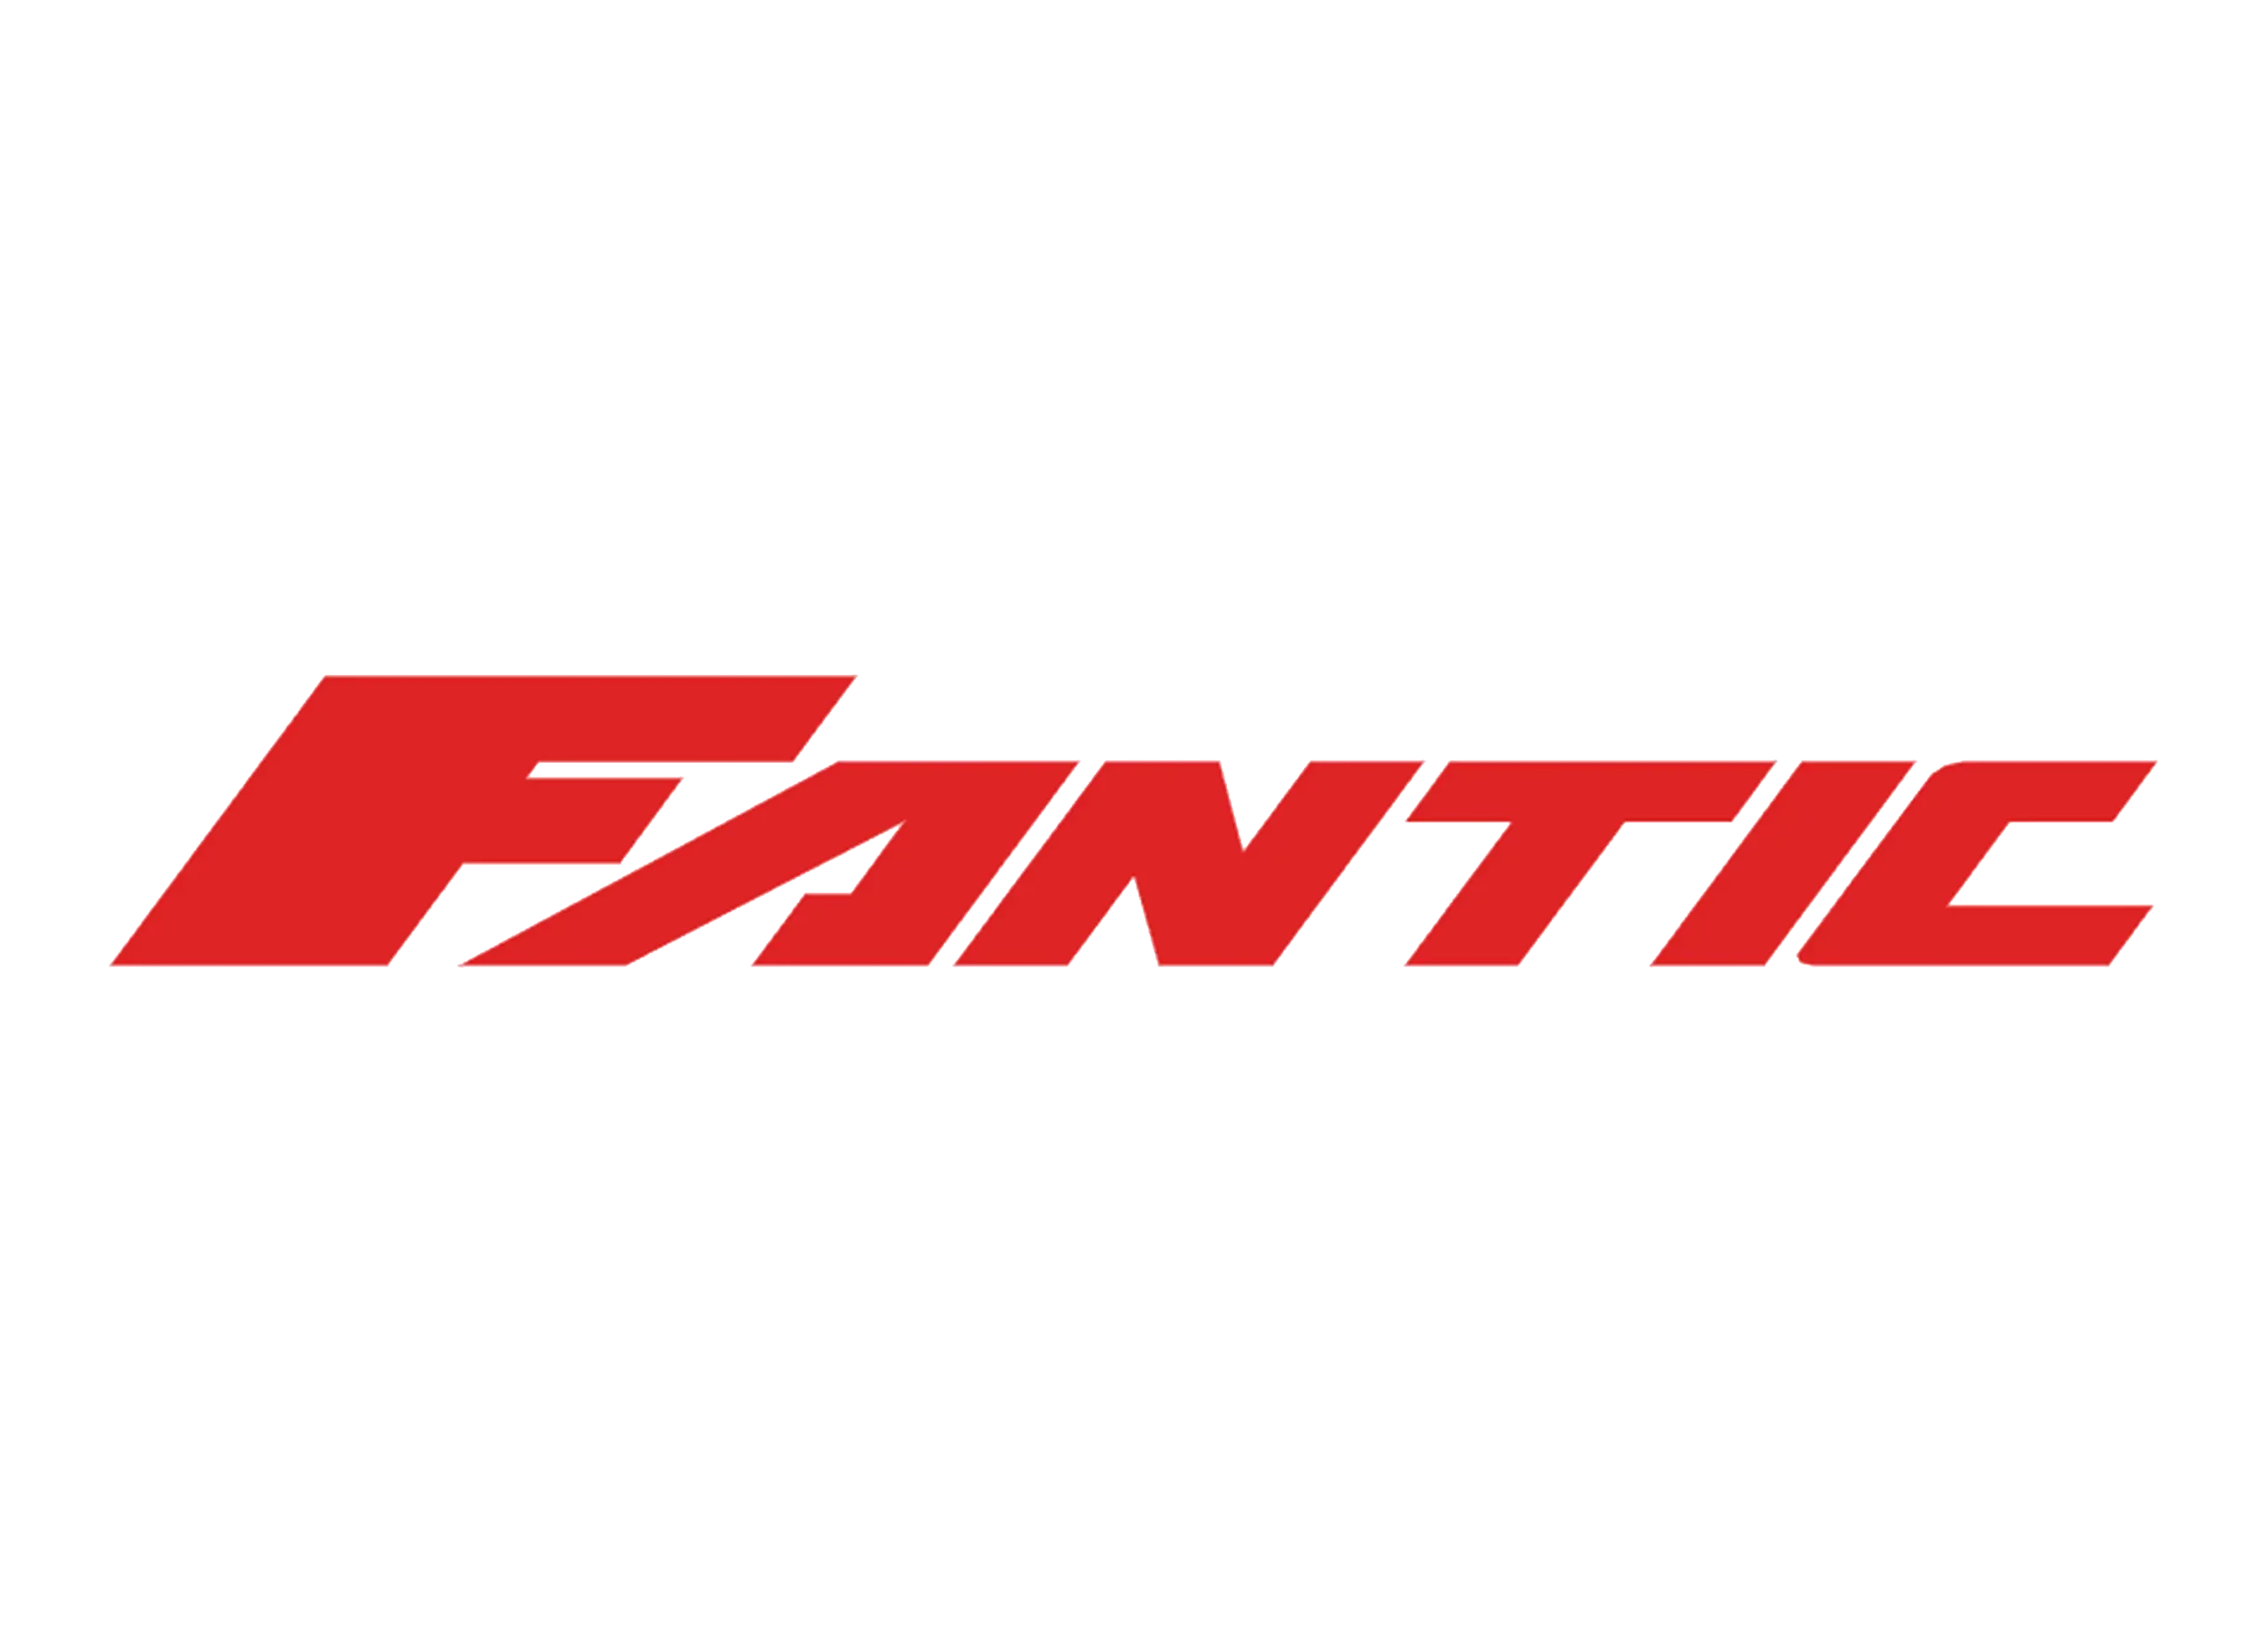 Fantic Motor logo 2016-present